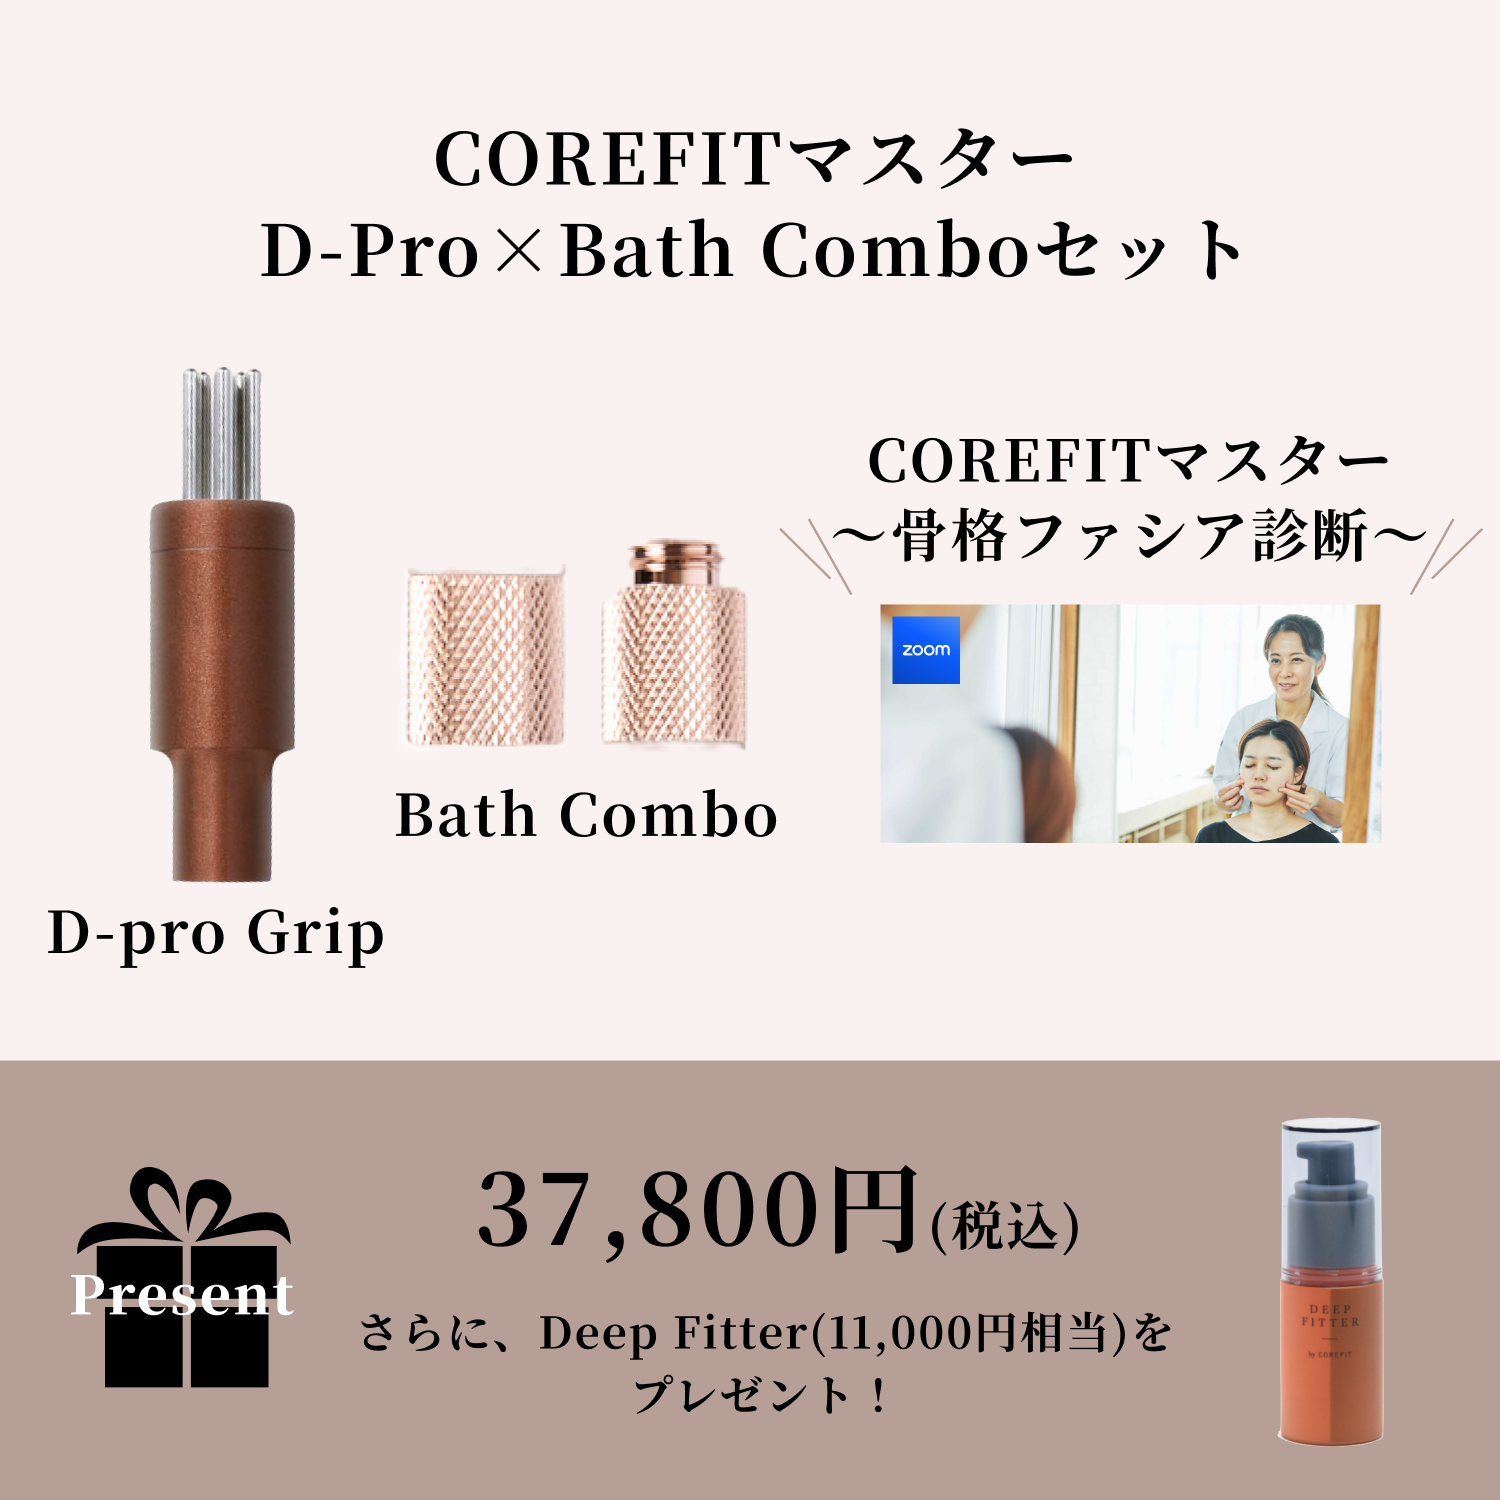 COREFIT Face-Pointer BathCombo／D-proGripお値段おいくらになりますか